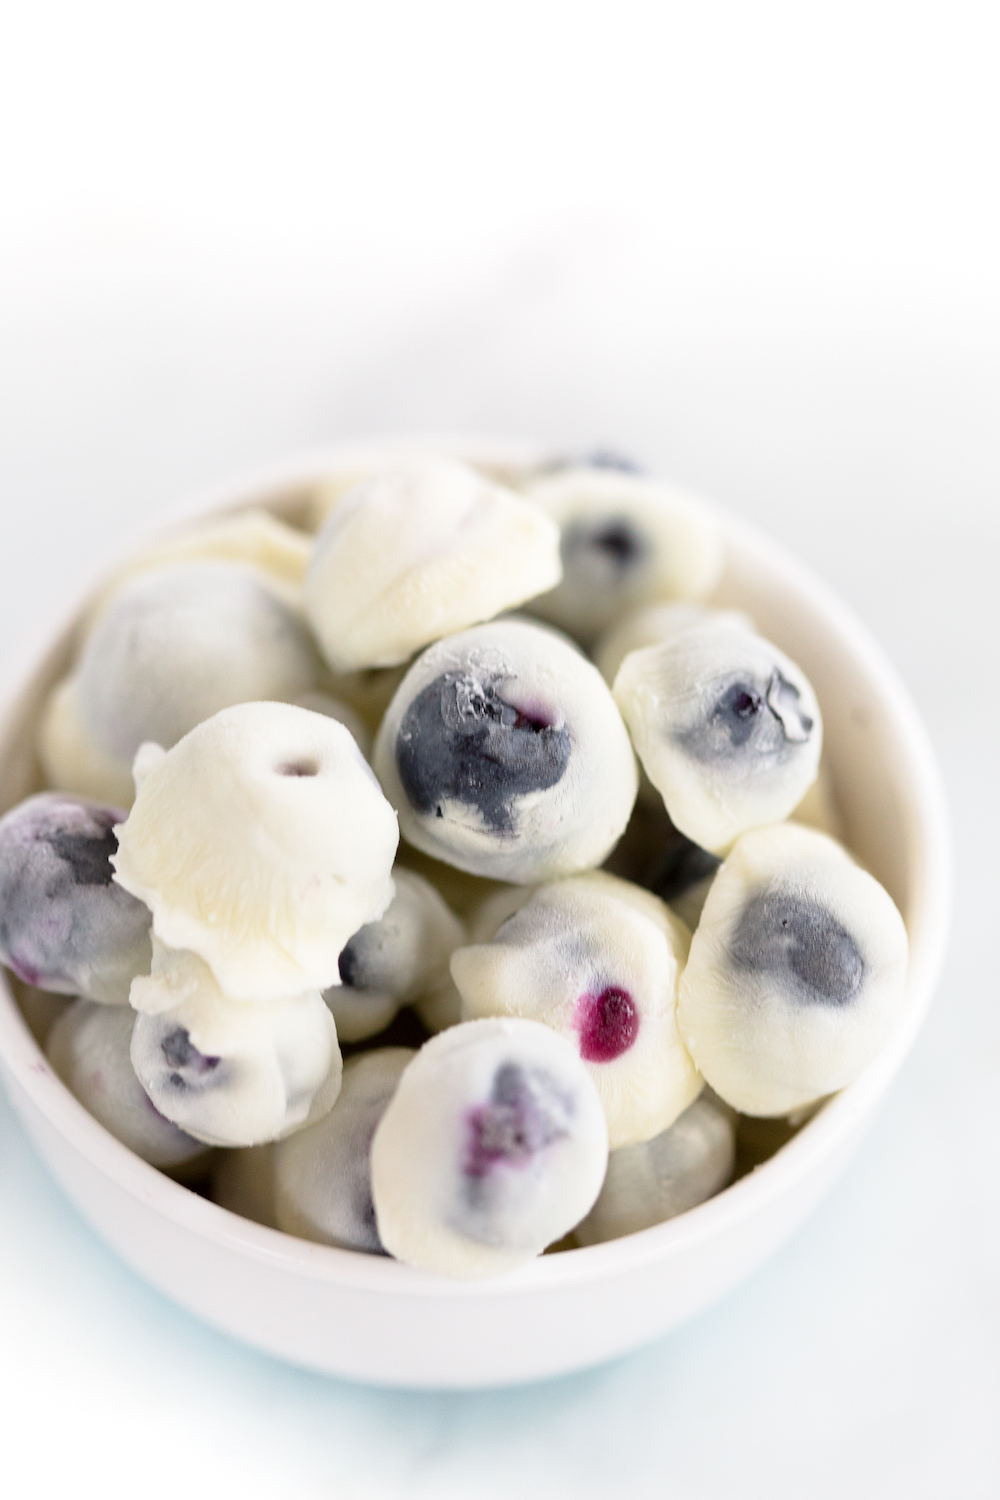  Greek Yogurt Covered Blueberries by It's Delish, 3